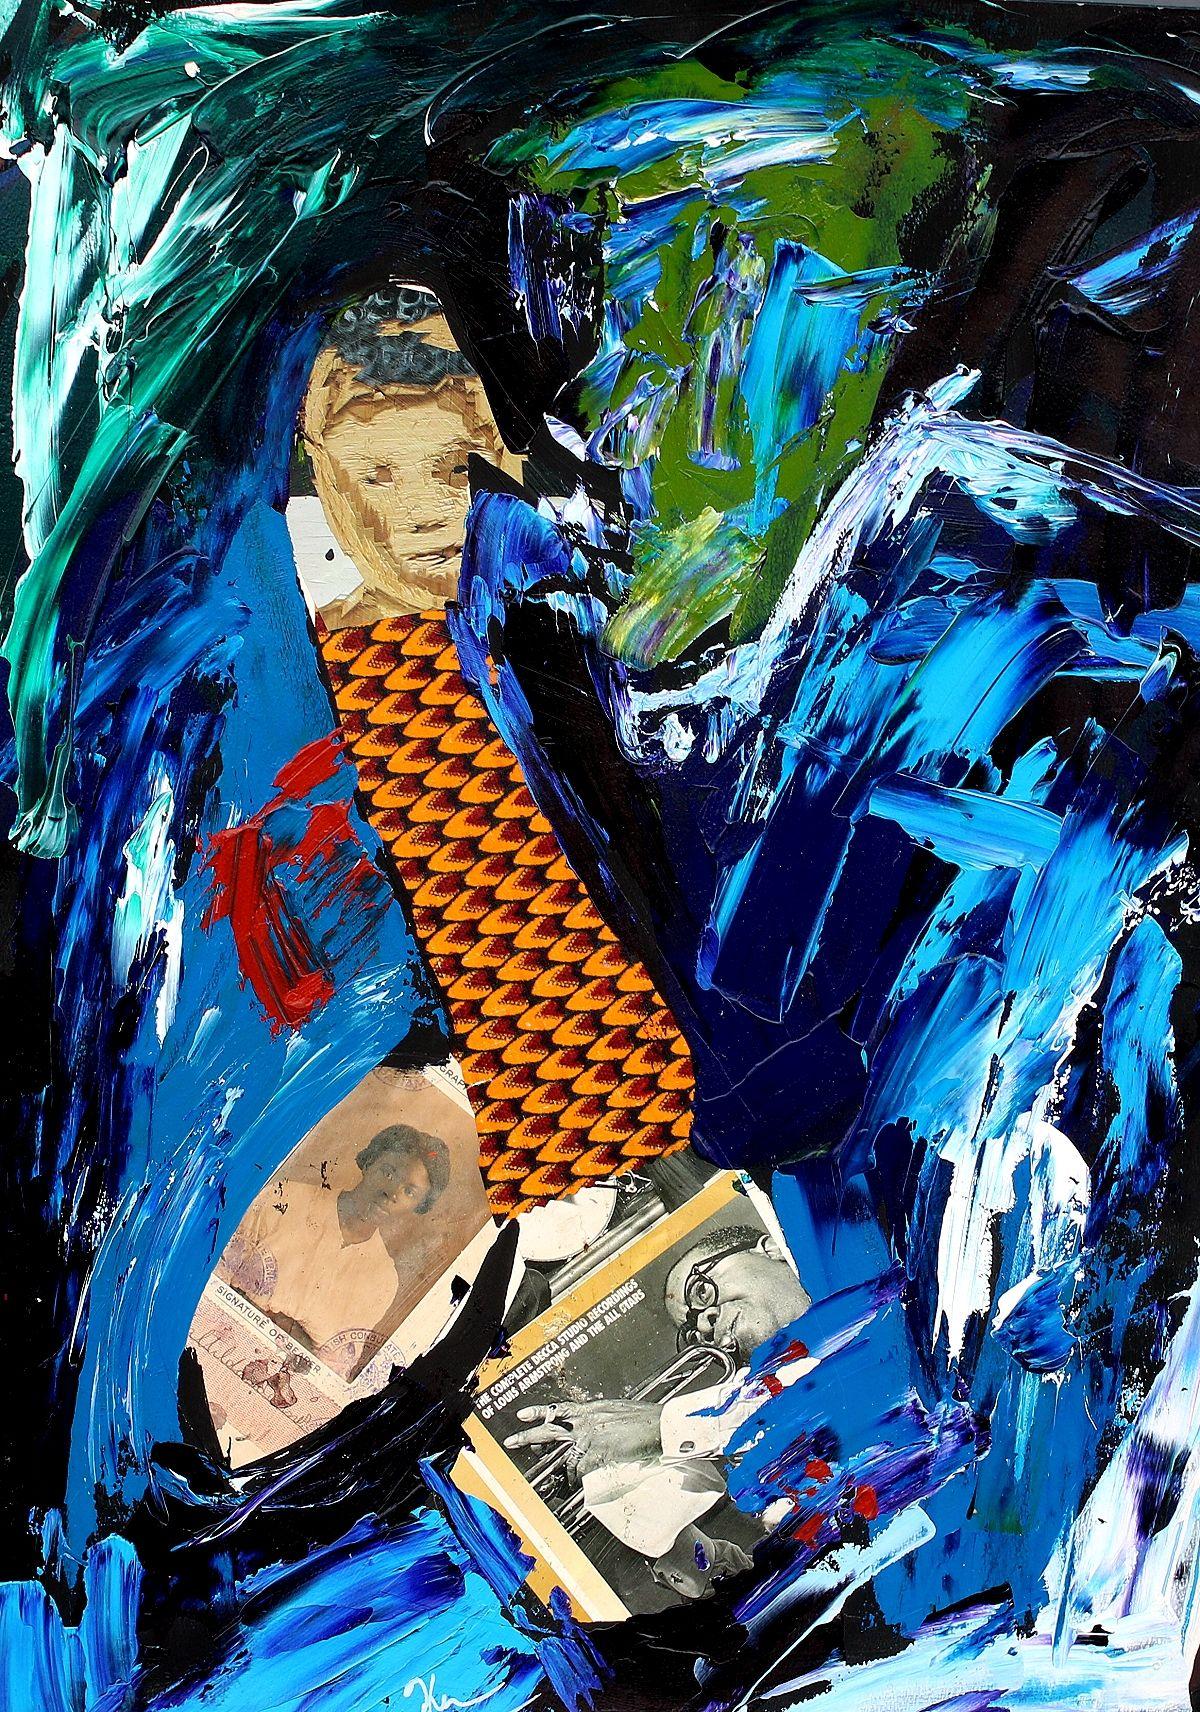 Abstract Blues Horn, Mixed Media on Paper - Mixed Media Art by Harold Smith